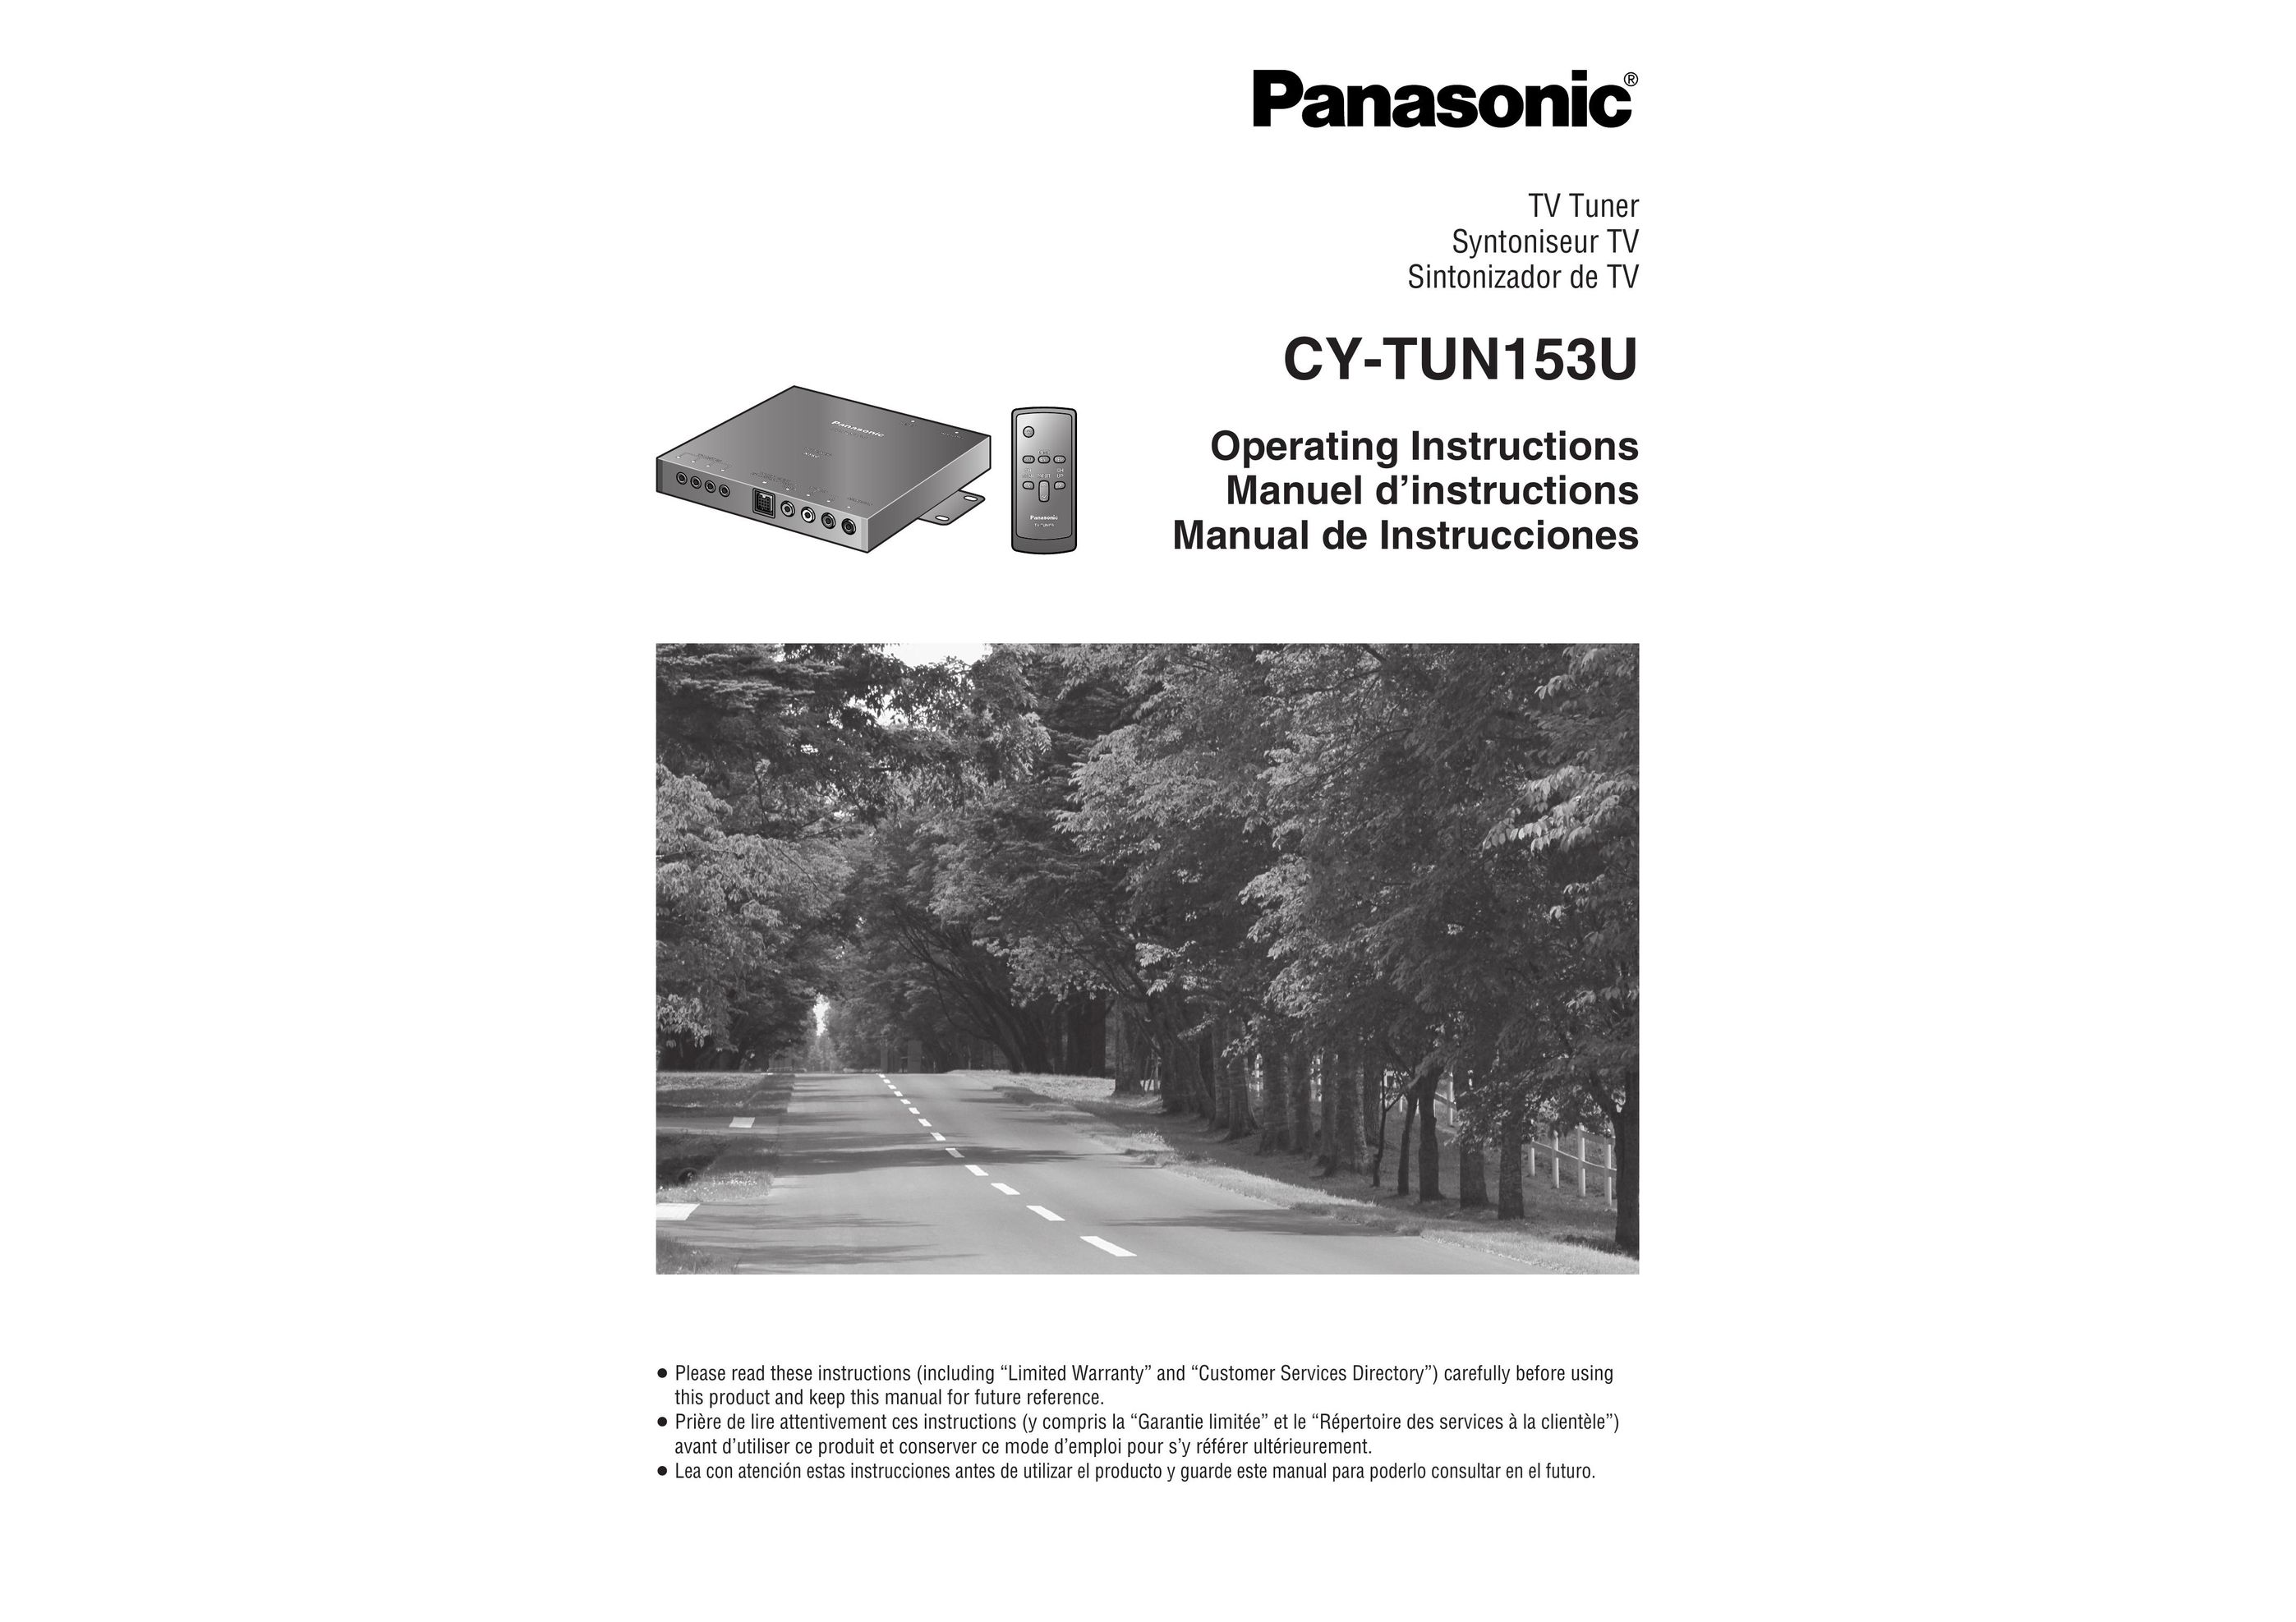 Panasonic CY-TUN153U Satellite TV System User Manual